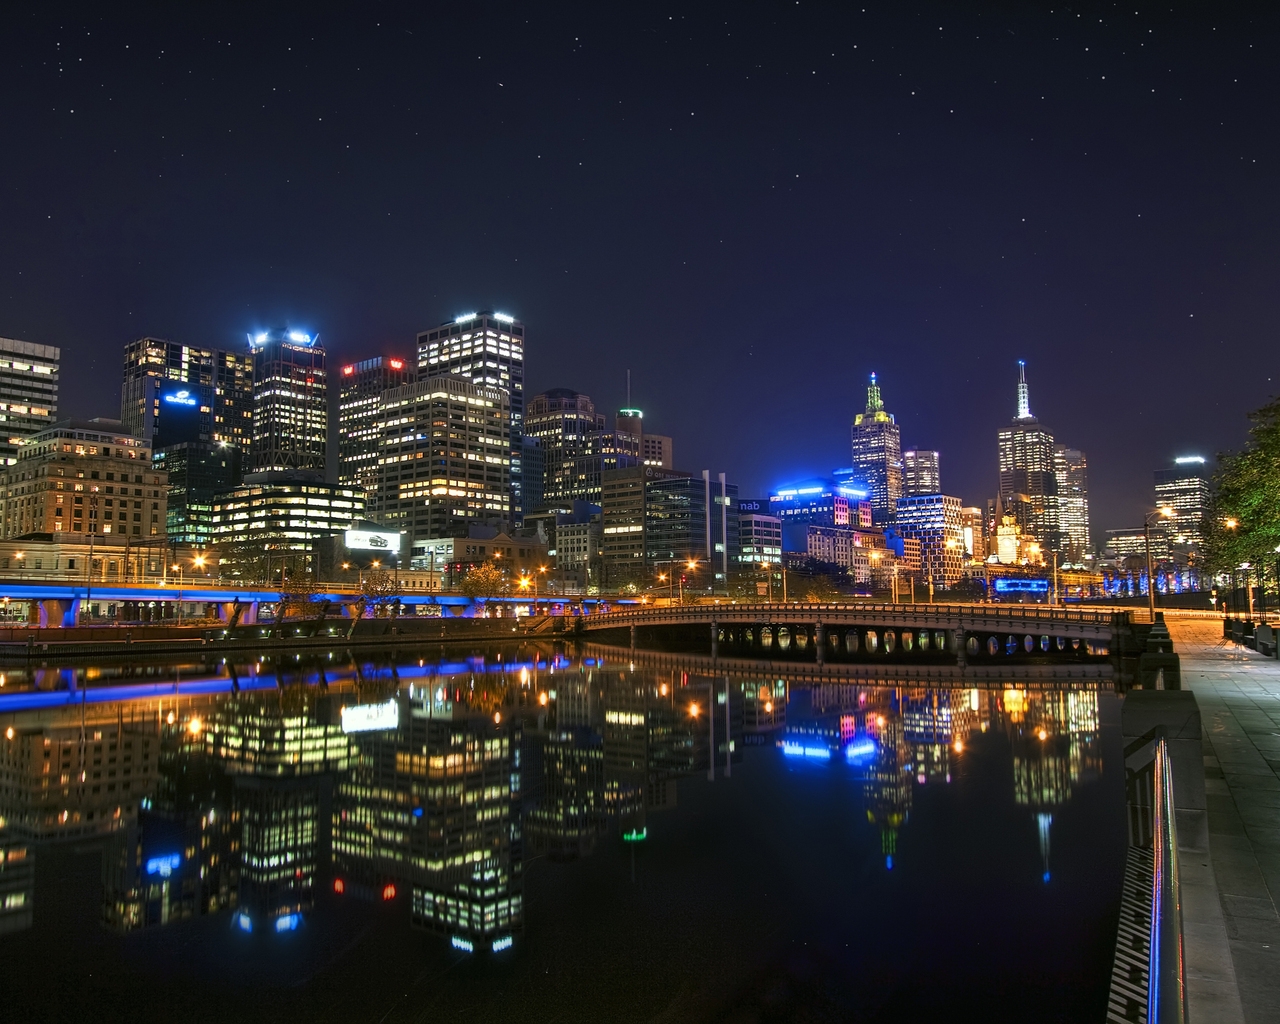 Melbourne Night Landscape for 1280 x 1024 resolution